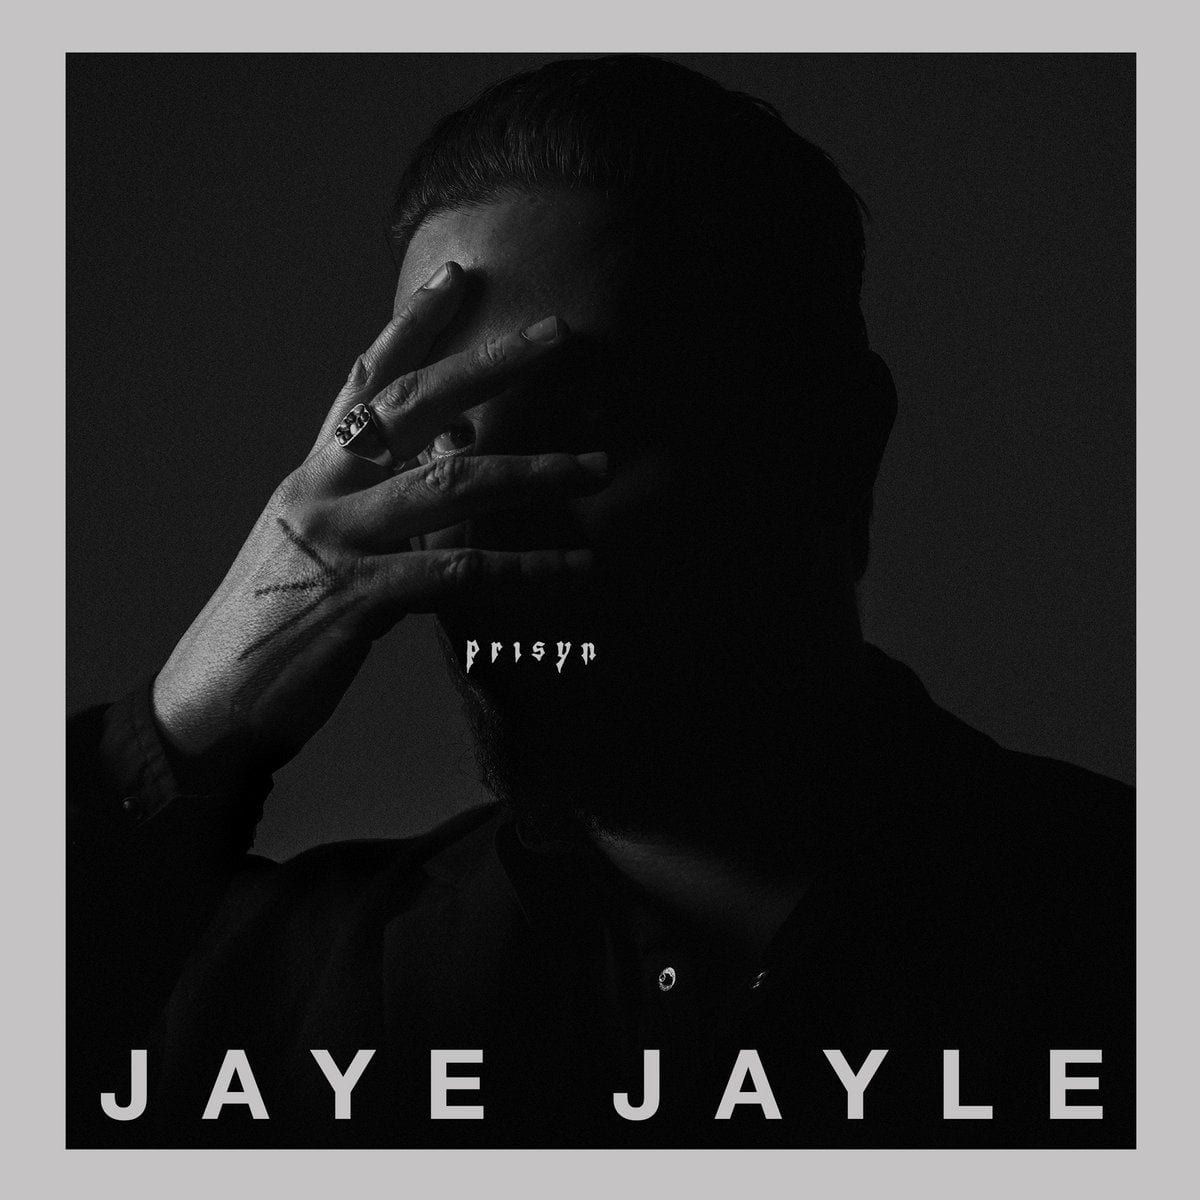 jaye-jayle-prisyn-review